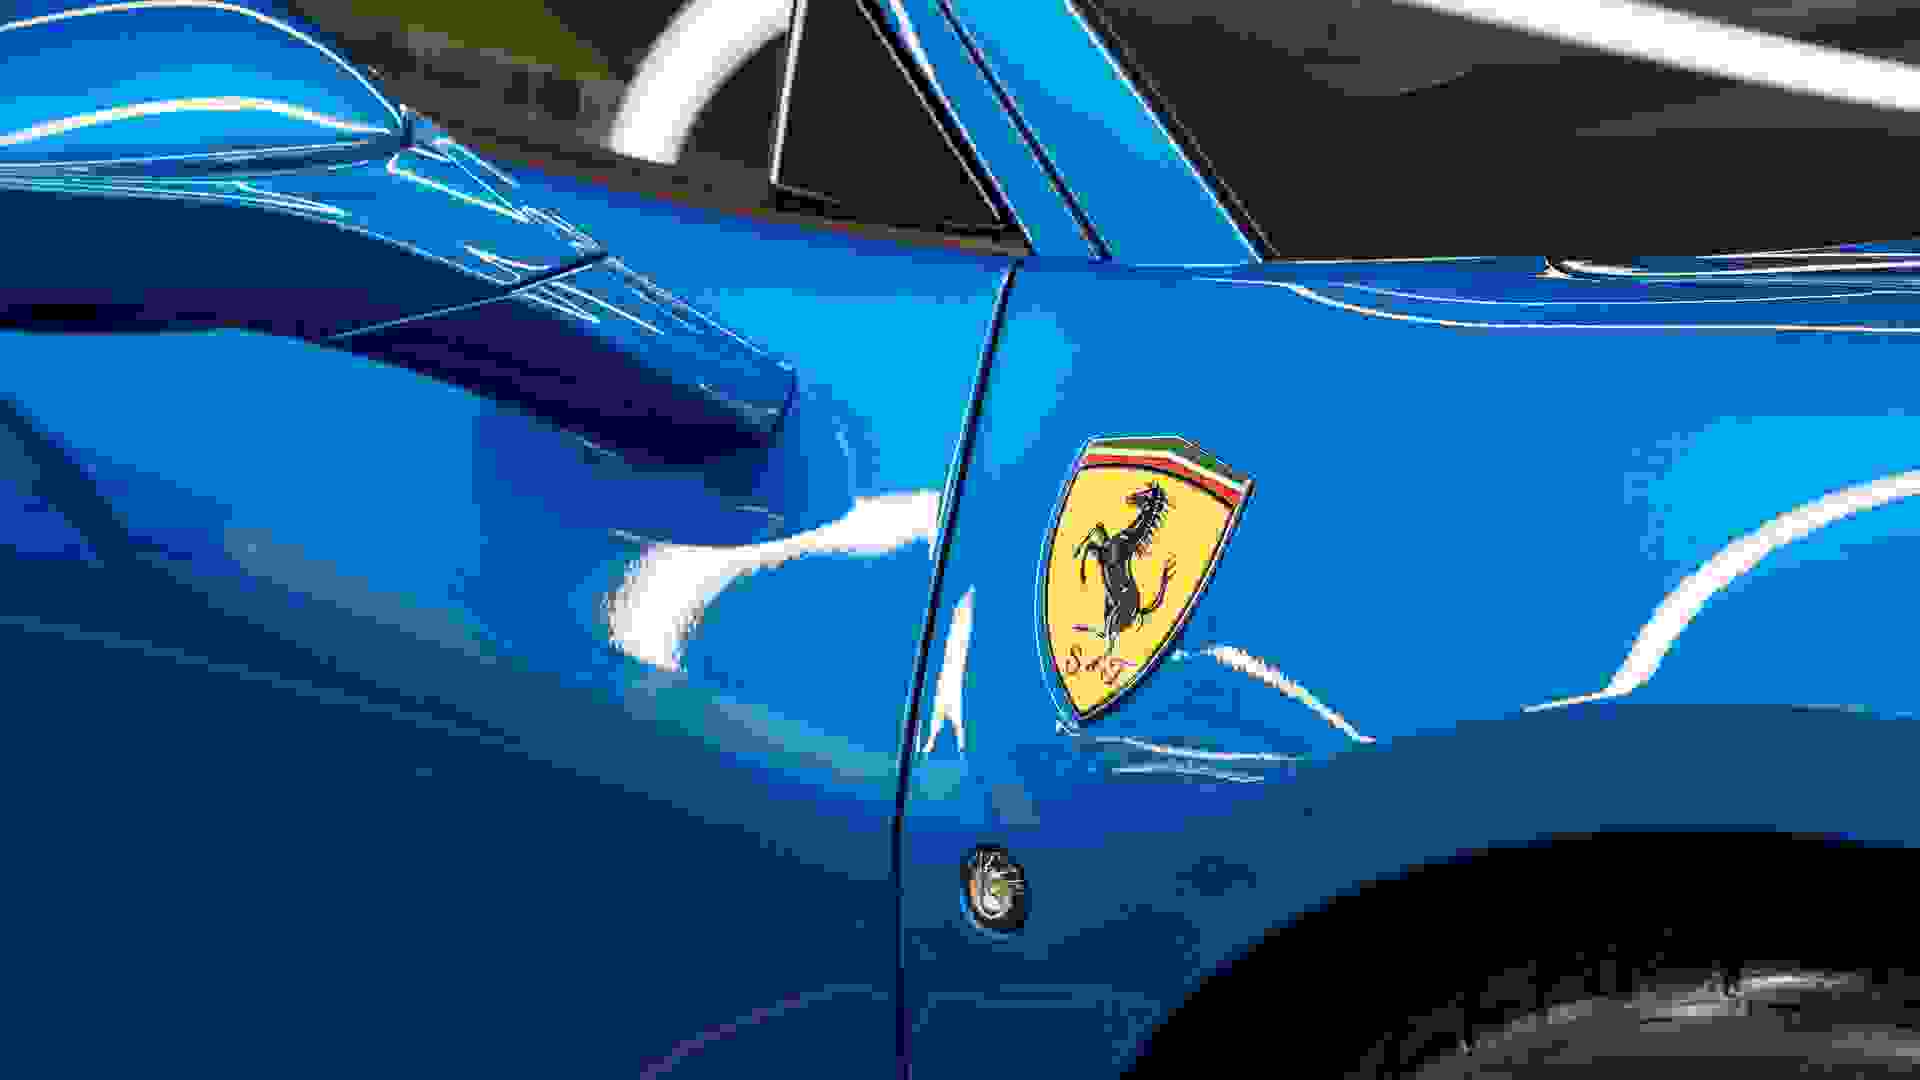 Ferrari F8 Photo d636411e-ac39-41ef-85e6-f0b6dd27fb19.jpg